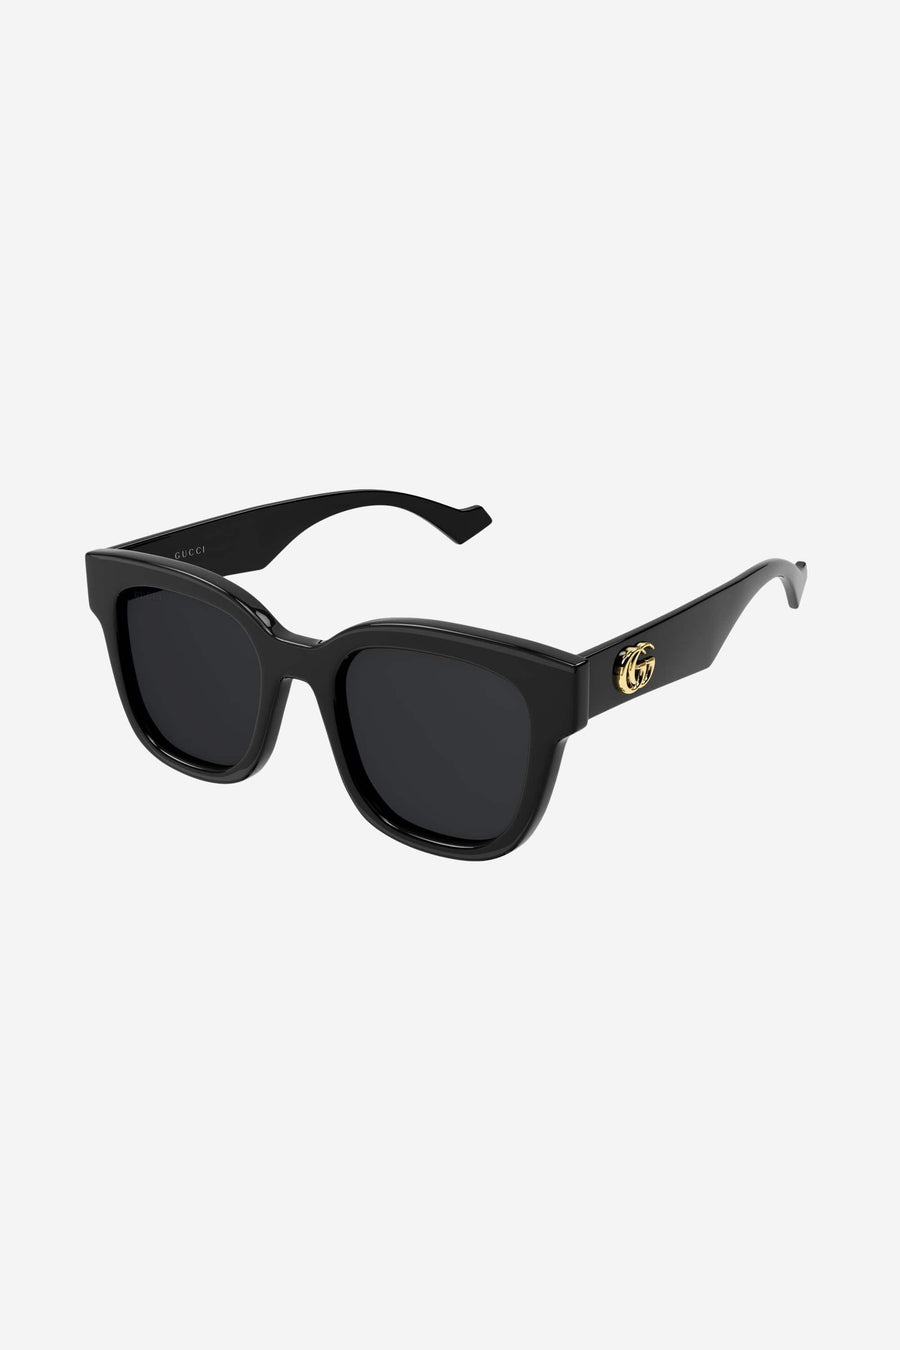 Gucci GG0998S squared femenine black sunglasses